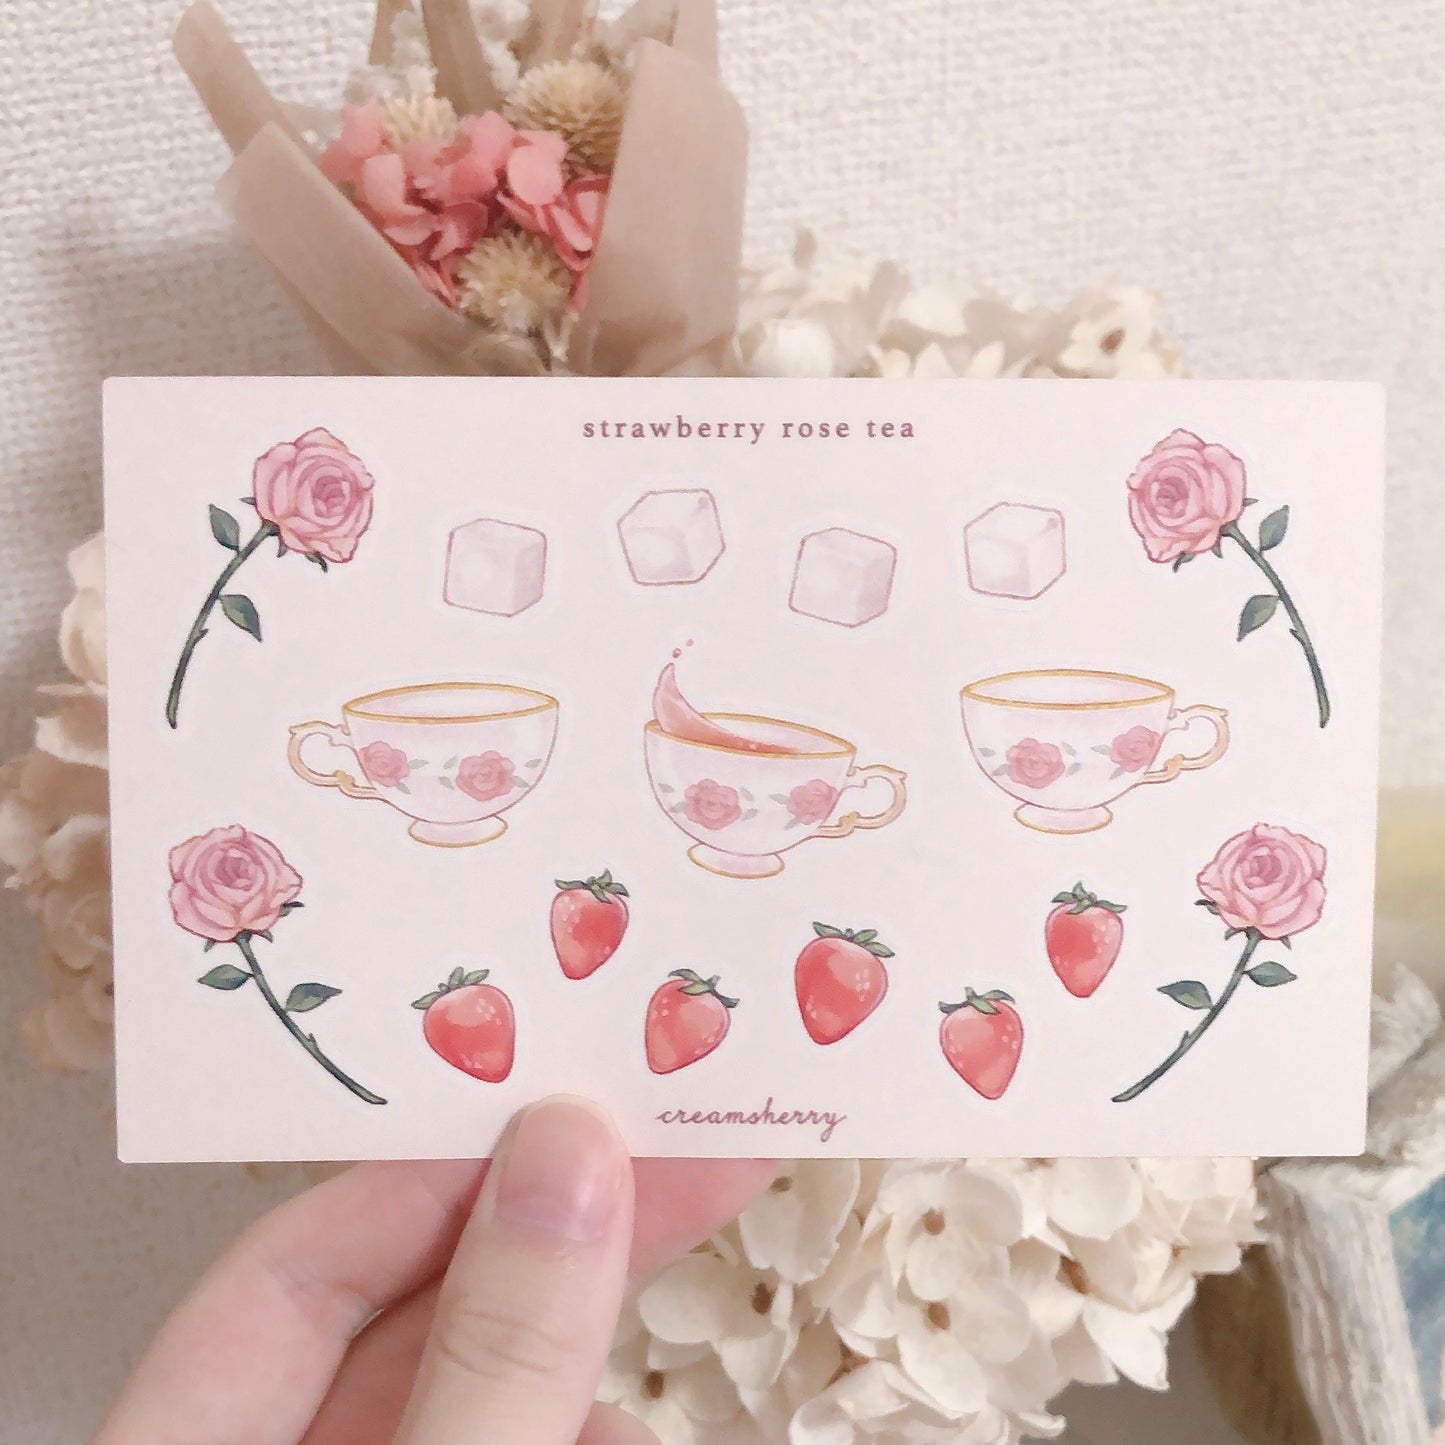 strawberry rose tea sticker sheet